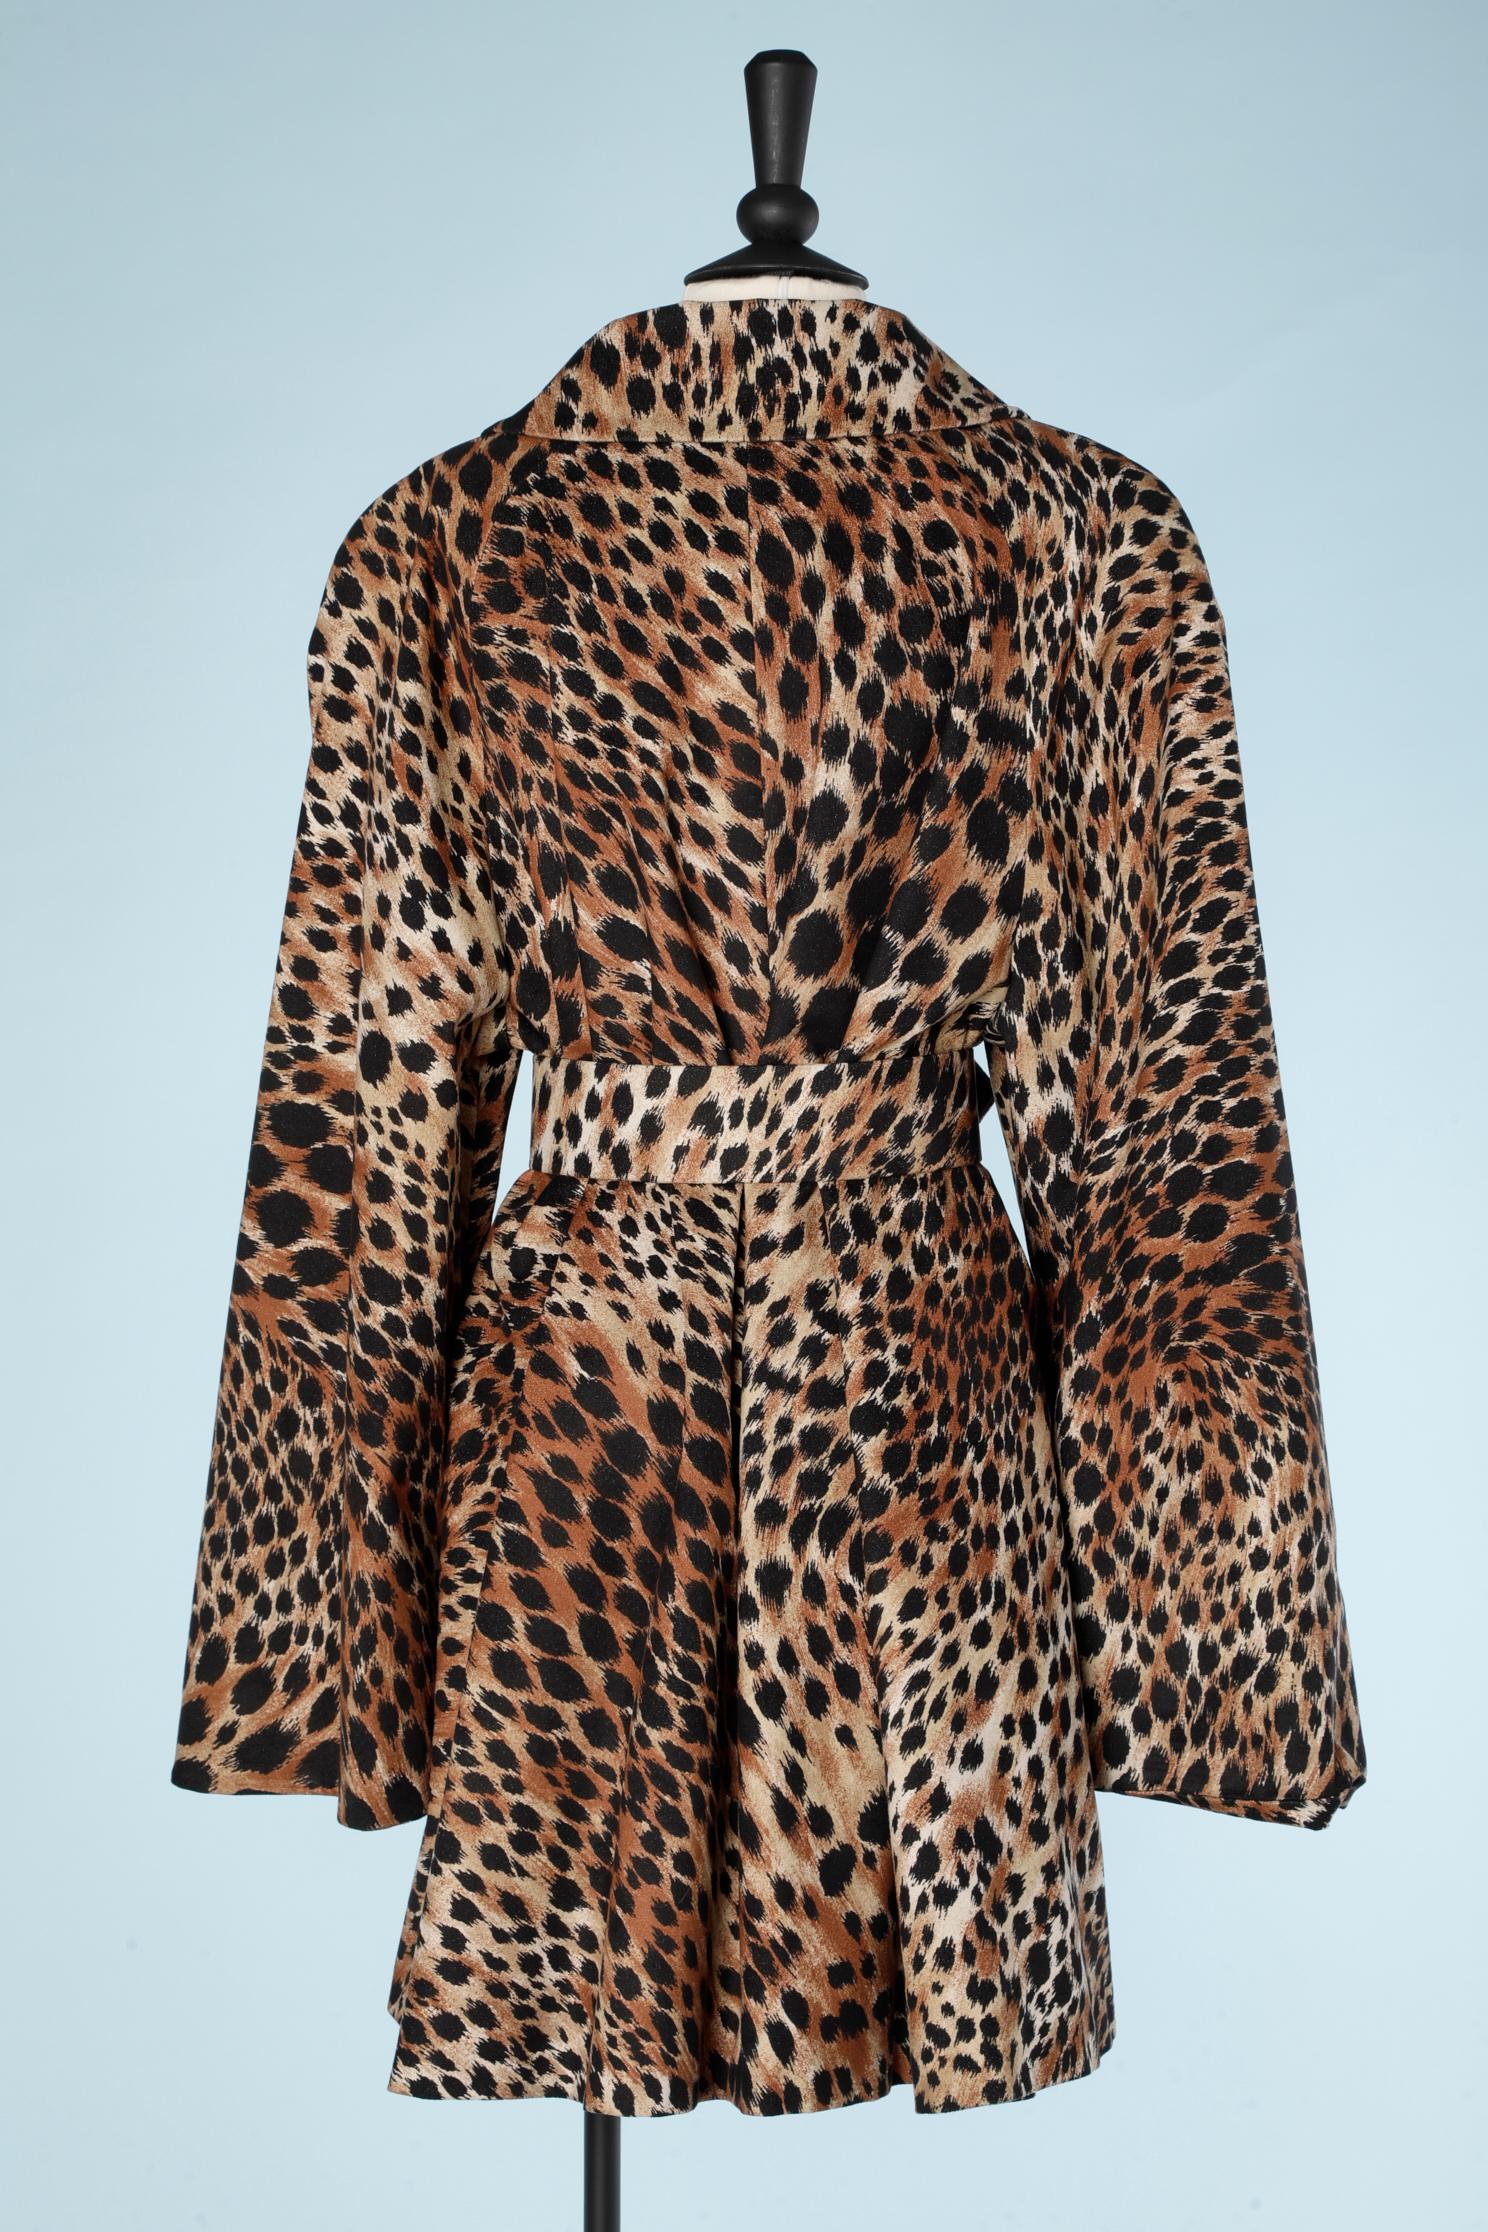 Leopard print faux suede trench coat Travilla  In Excellent Condition For Sale In Saint-Ouen-Sur-Seine, FR